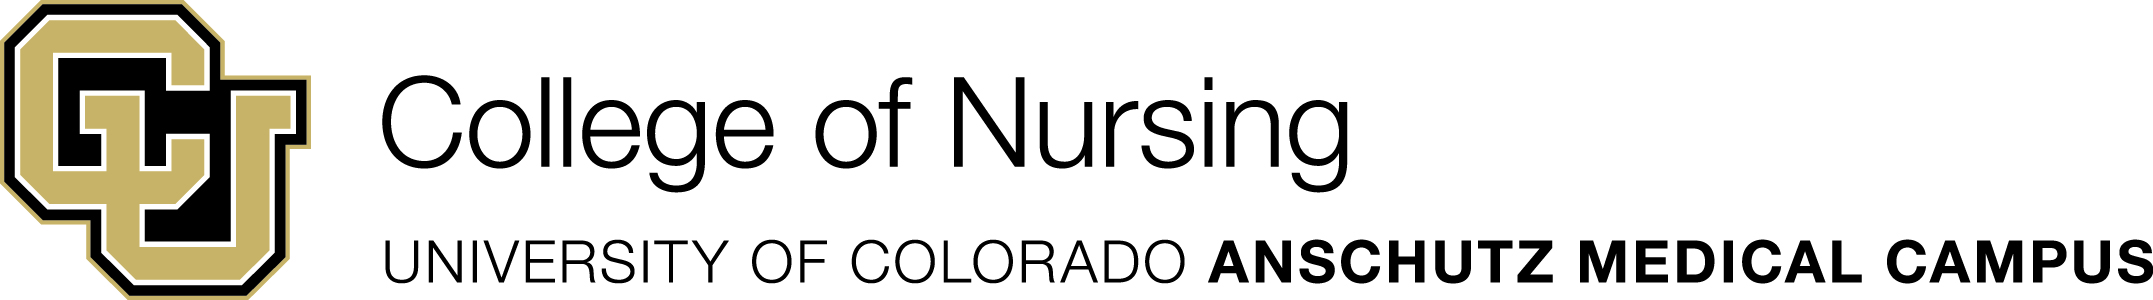 CU college nursing logo sponsor